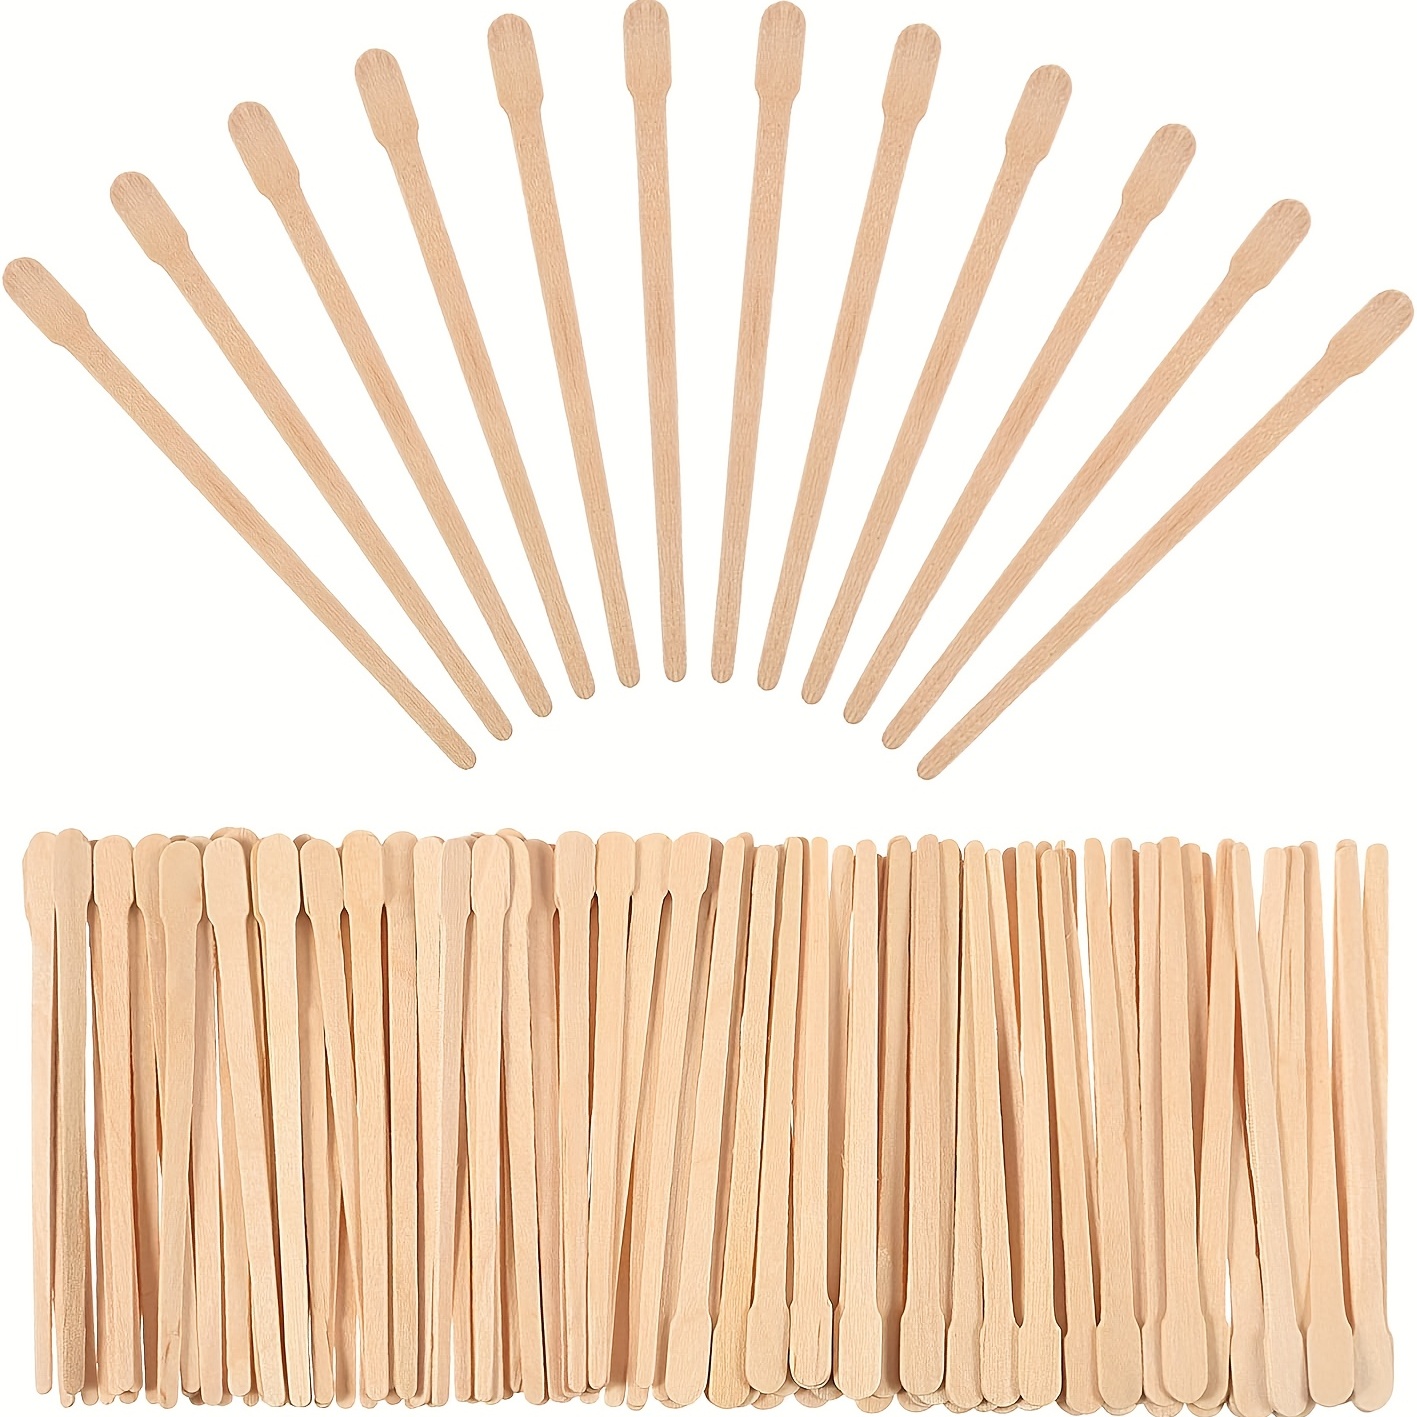 Waxing Natural Wood Body Hair Removal Sticks Applicator Wood - Temu